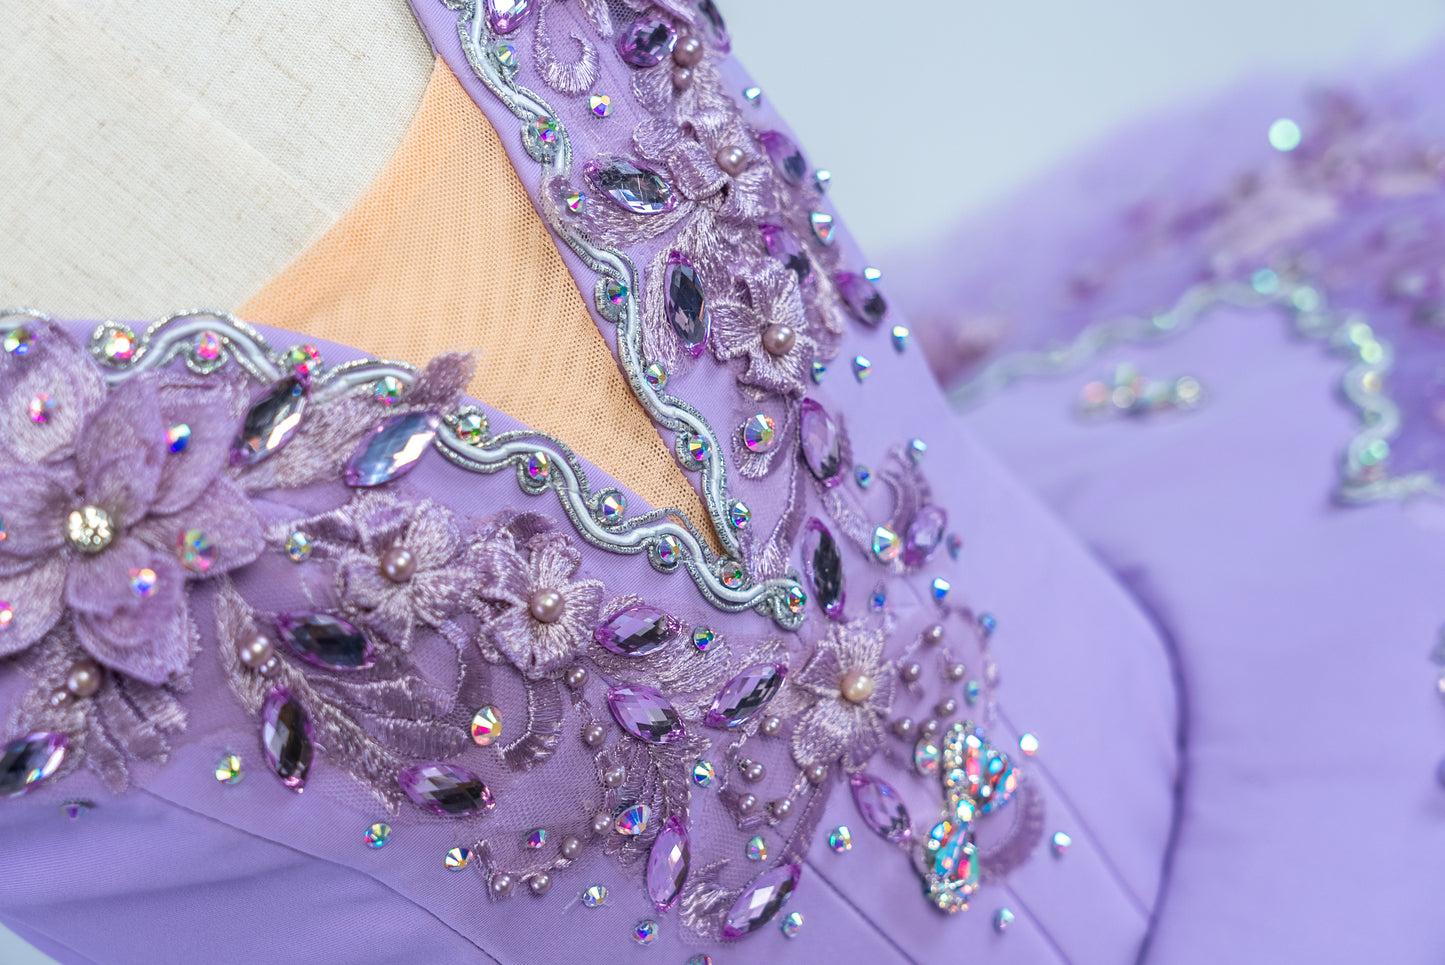 Young Lilac Princess - Dancewear by Patricia